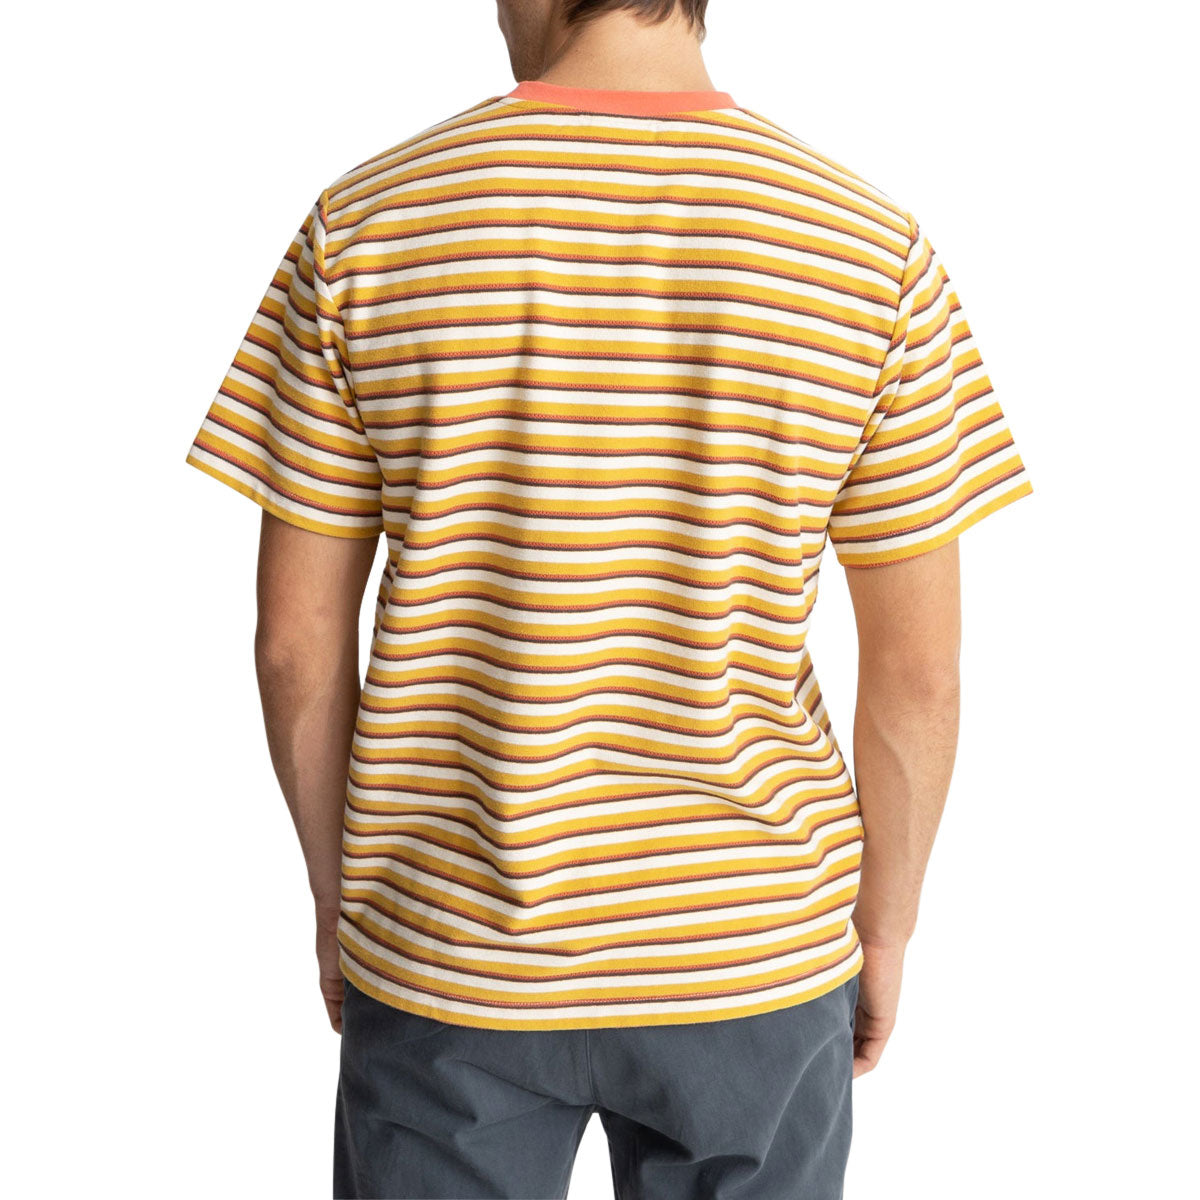 Rhythm Vintage Stripe T-Shirt - Mustard image 3